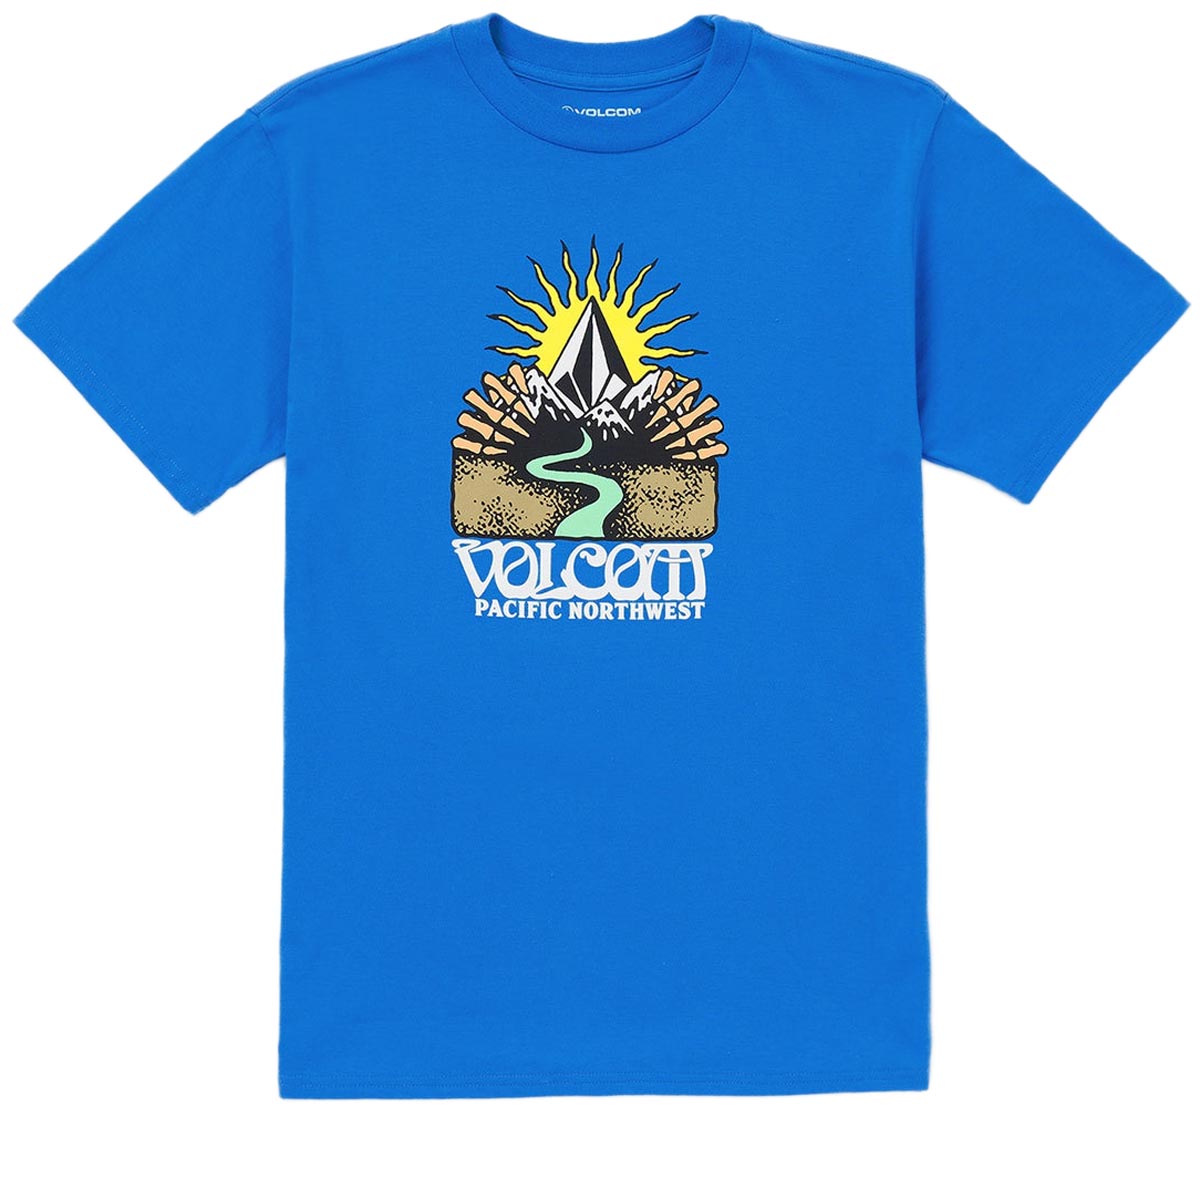 Volcom PNW T-Shirt - Patriot Blue image 1